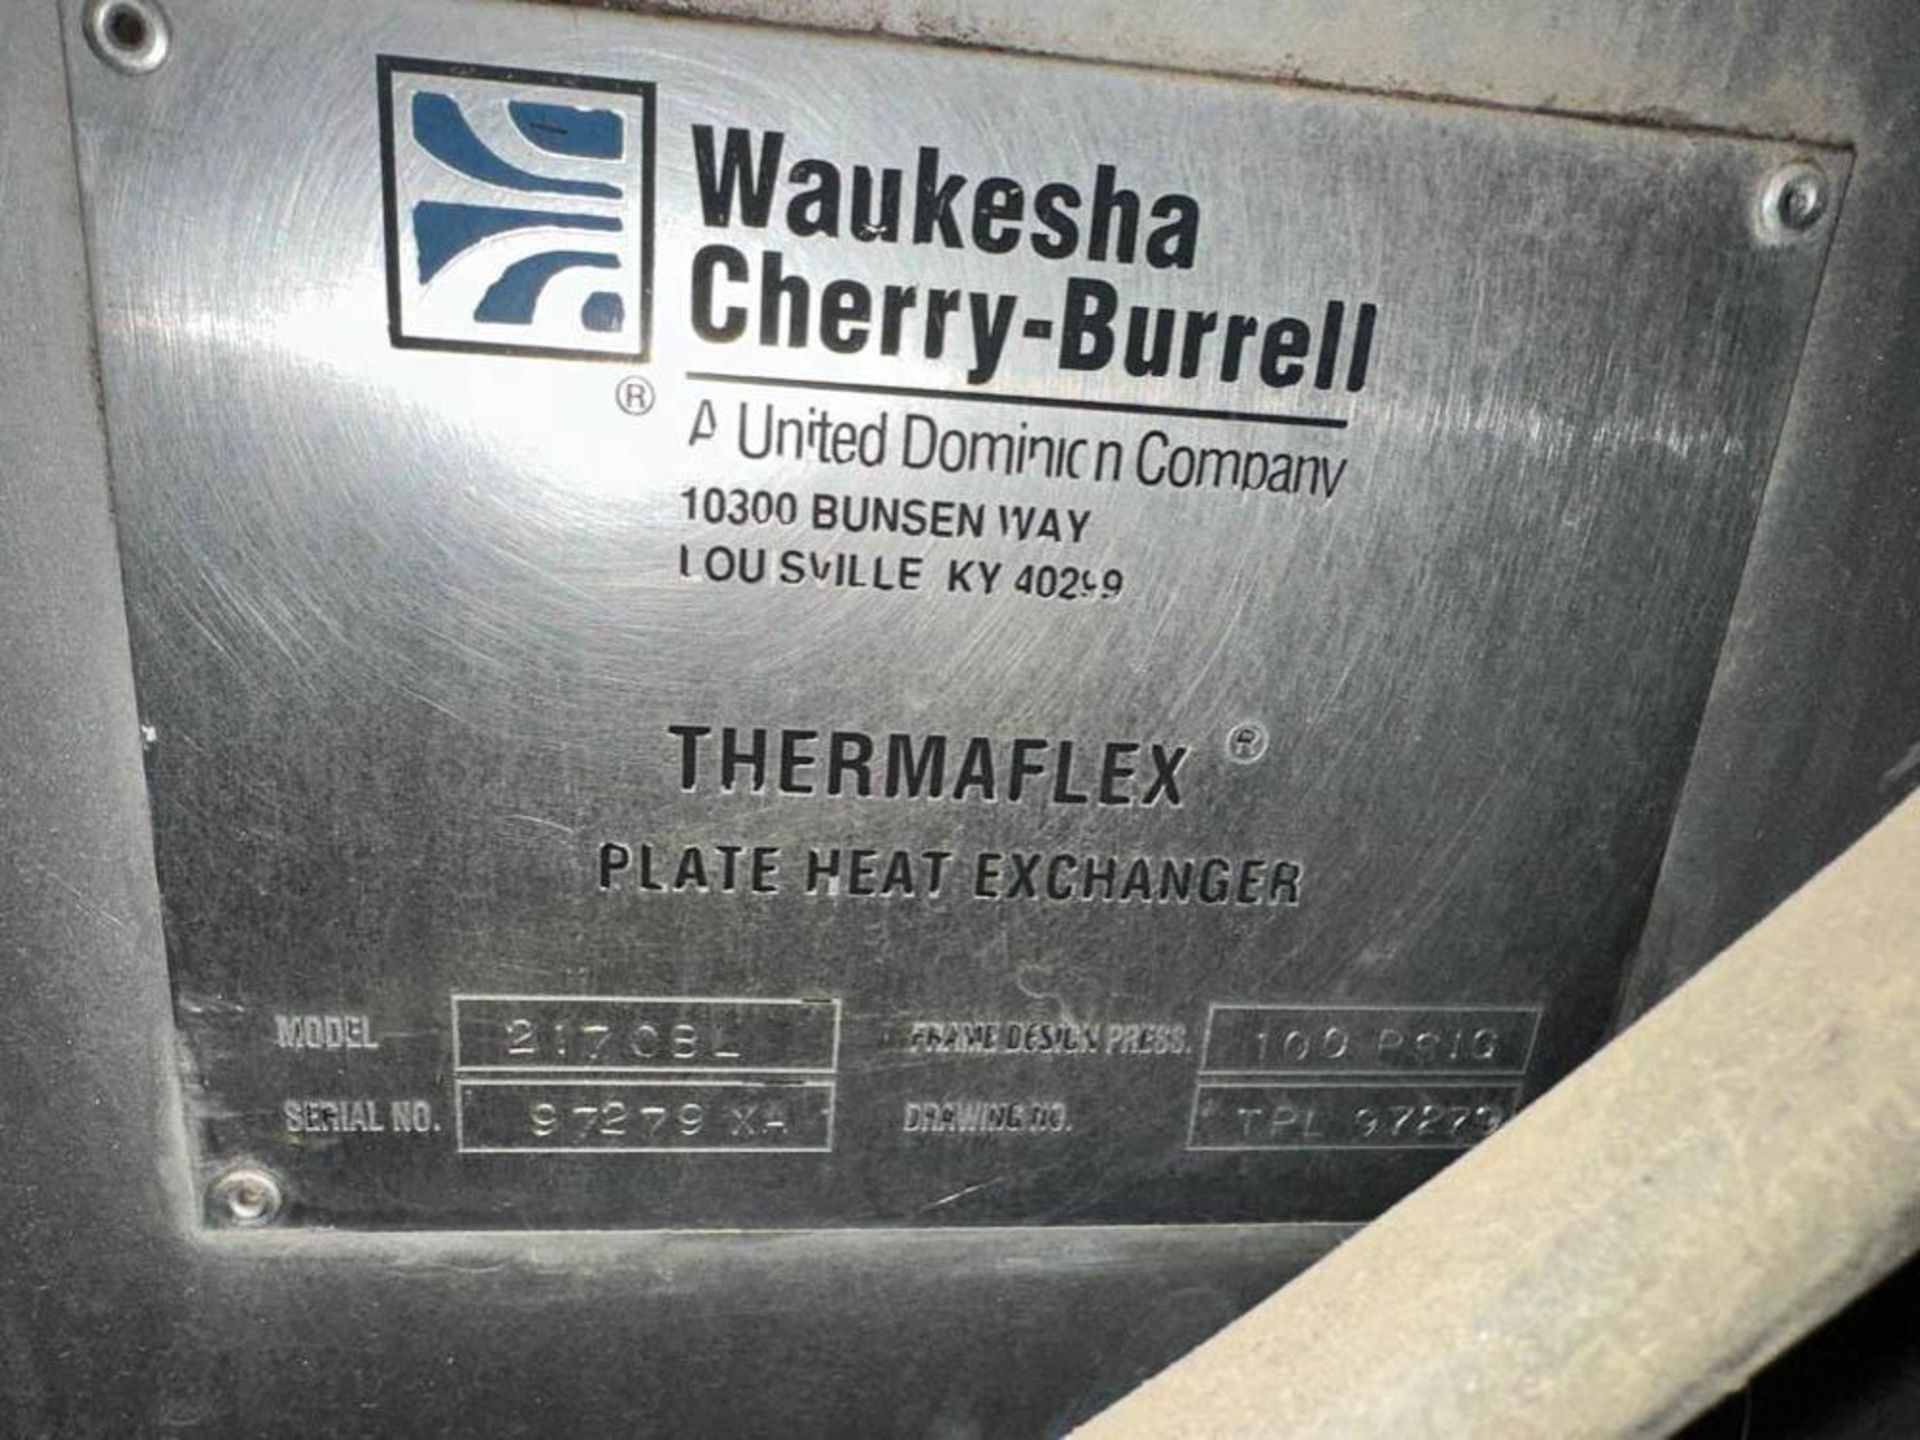 Waukesha Cherry-Burrell S/S Plate Heat Exchanger, Model: 217-OBL, S/N: 97279XA - Rigging Fee: $250 - Image 2 of 2